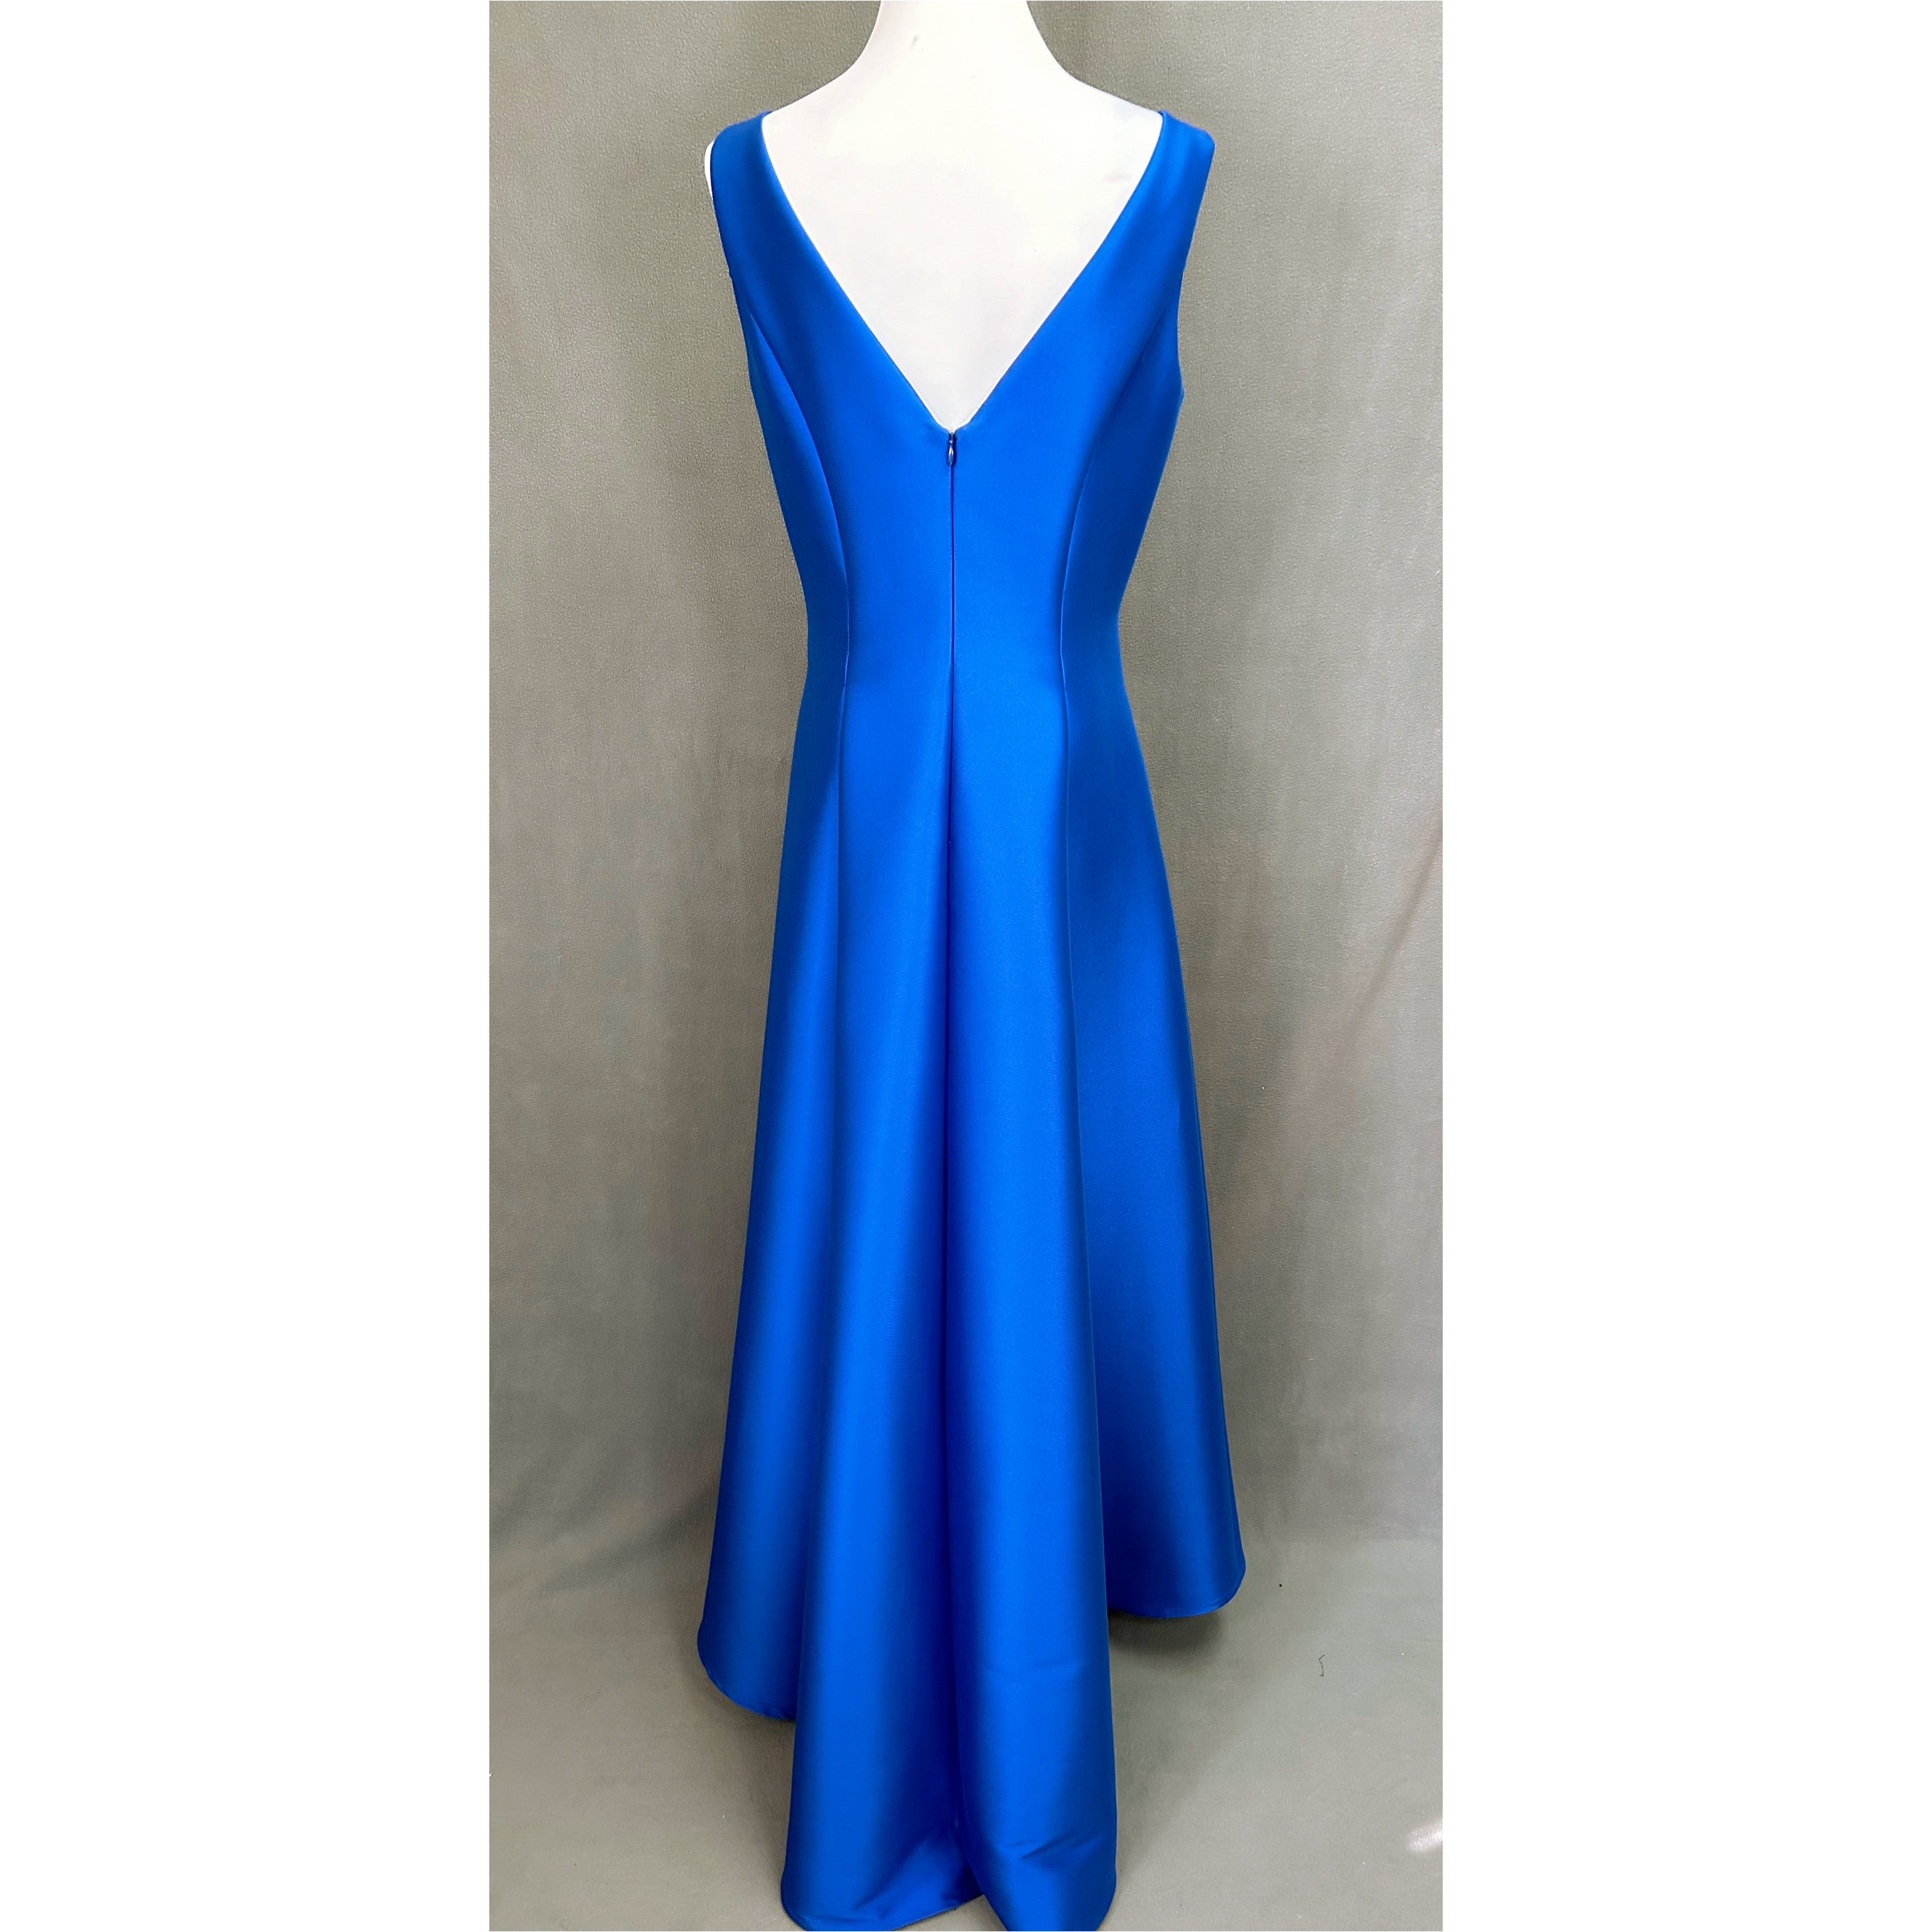 Frank Lyman cobalt dress, size 8, NEW WITH TAGS